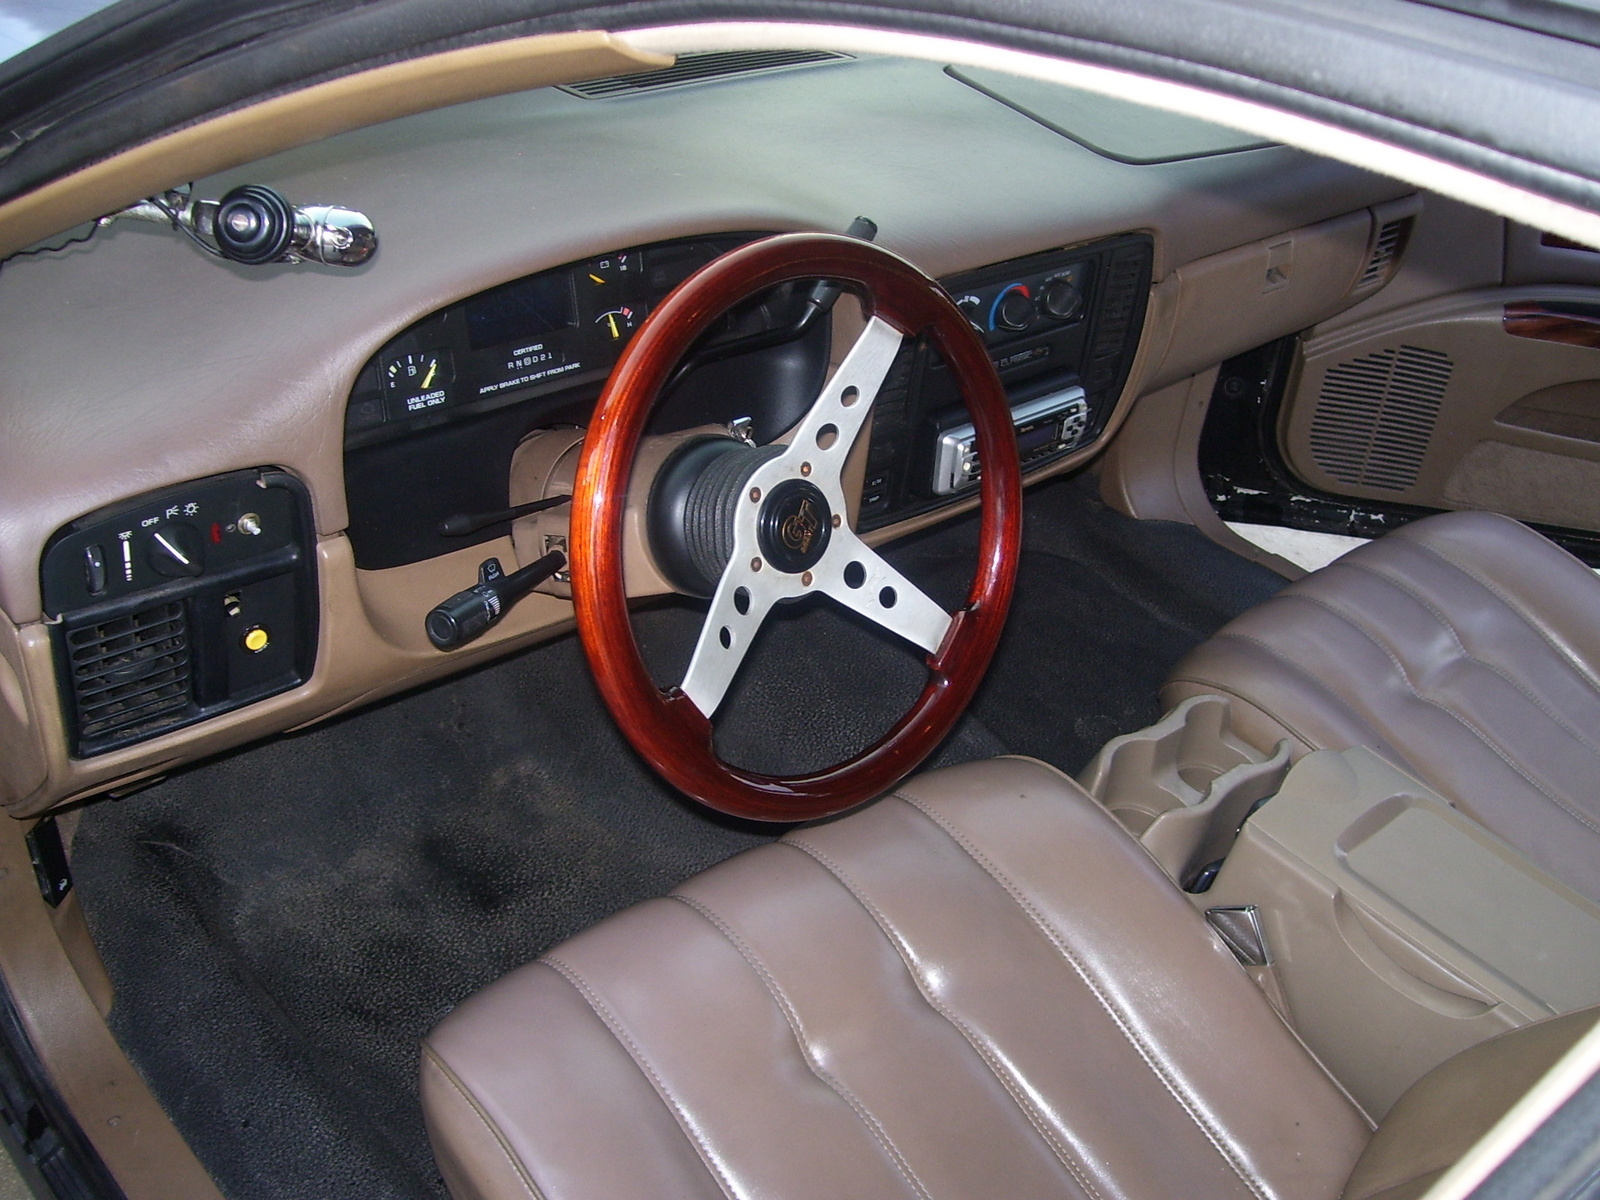 Chevrolet Caprice 4 dr sedan